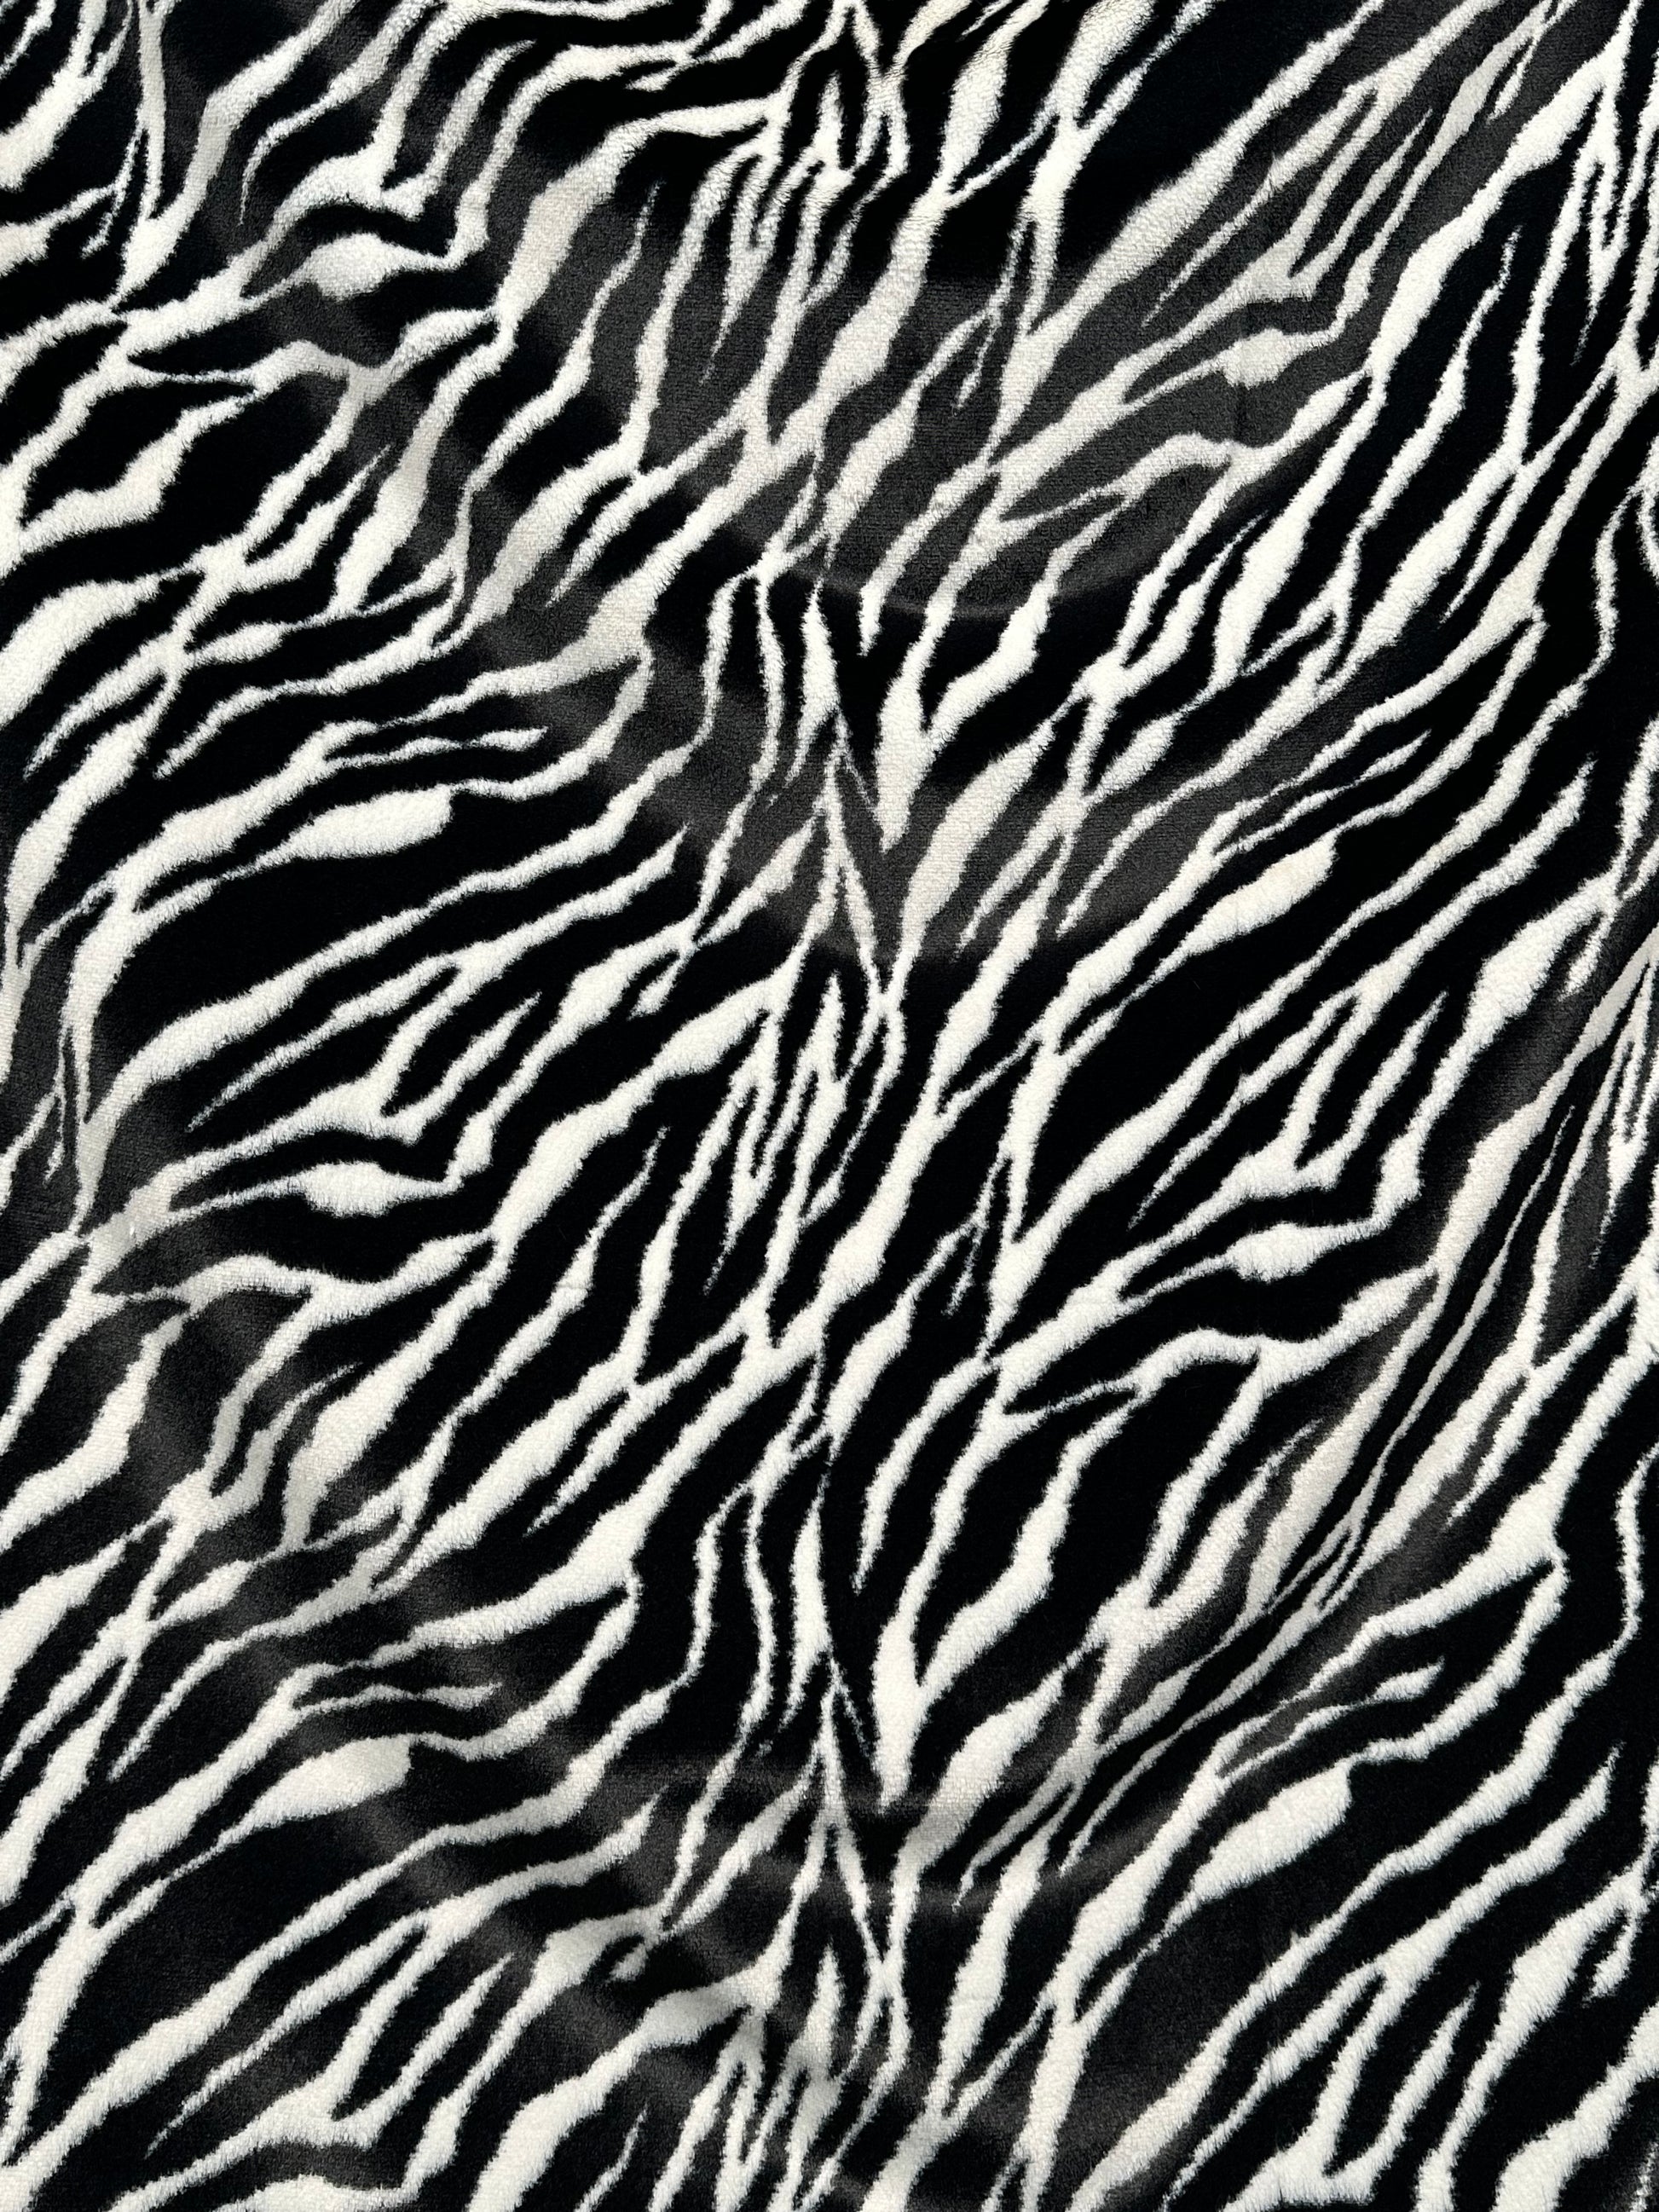 Cuddle Baby Zebra on Heather Zebra Dewberry Double Minky Adult Large Blanket - Whimsical Luxury - 54x75